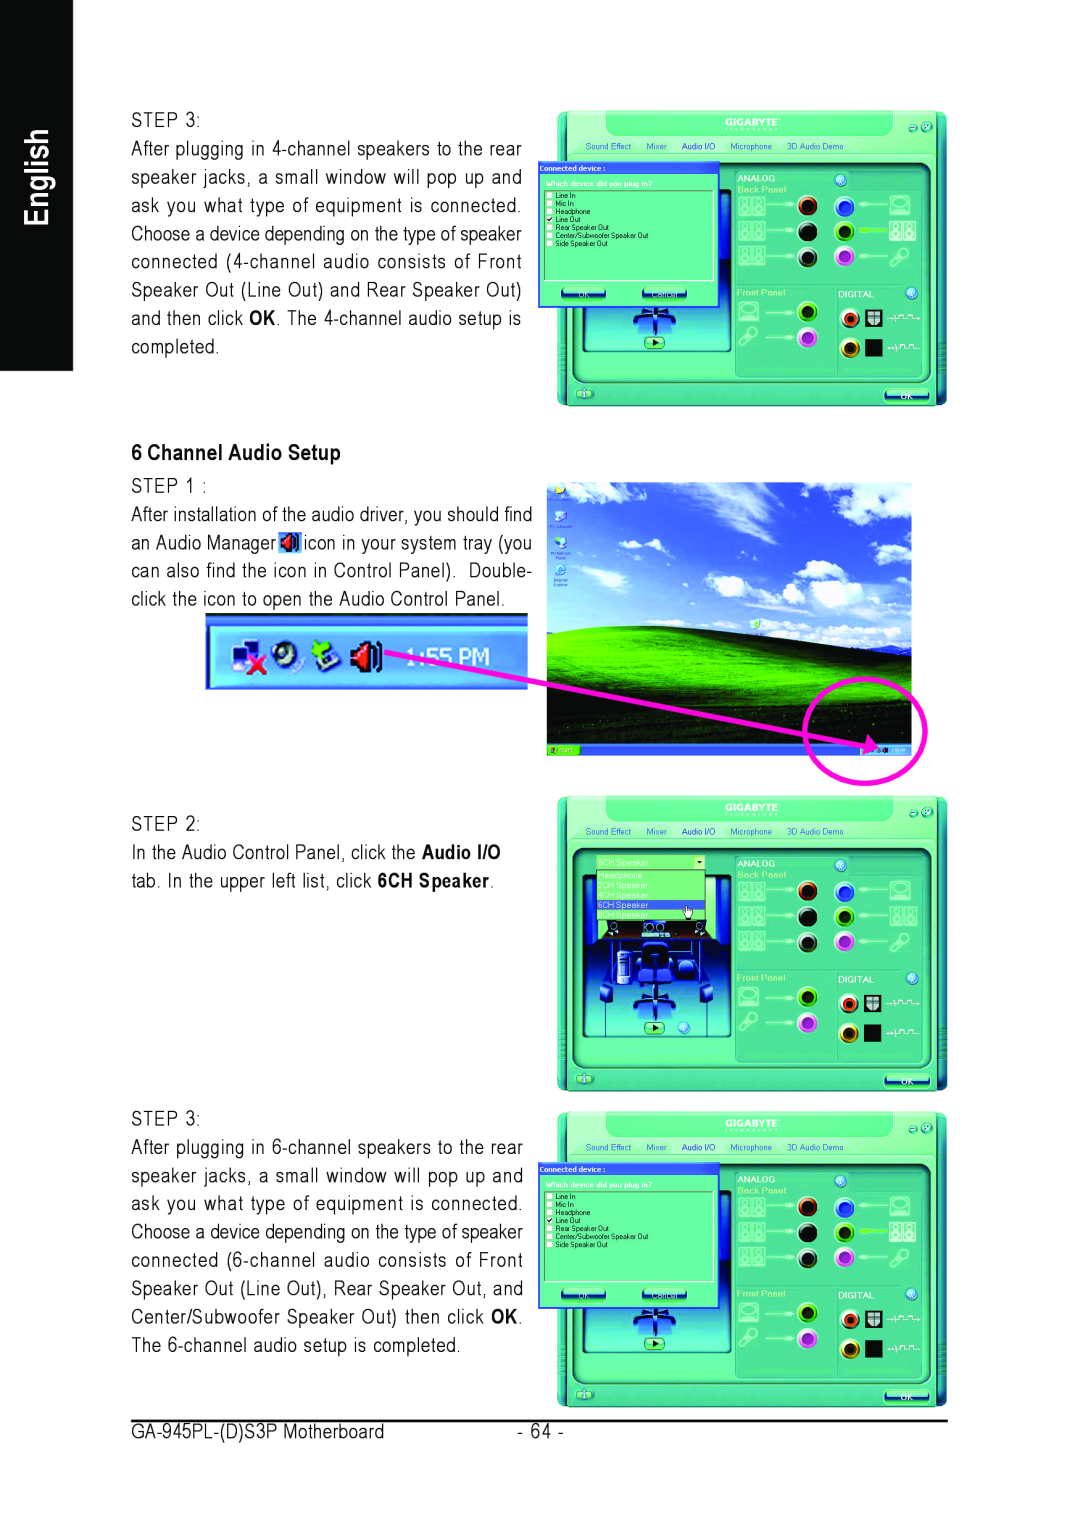 Intel GA-945PL-S3P, GA-945PL-DS3P user manual Channel Audio Setup, English 